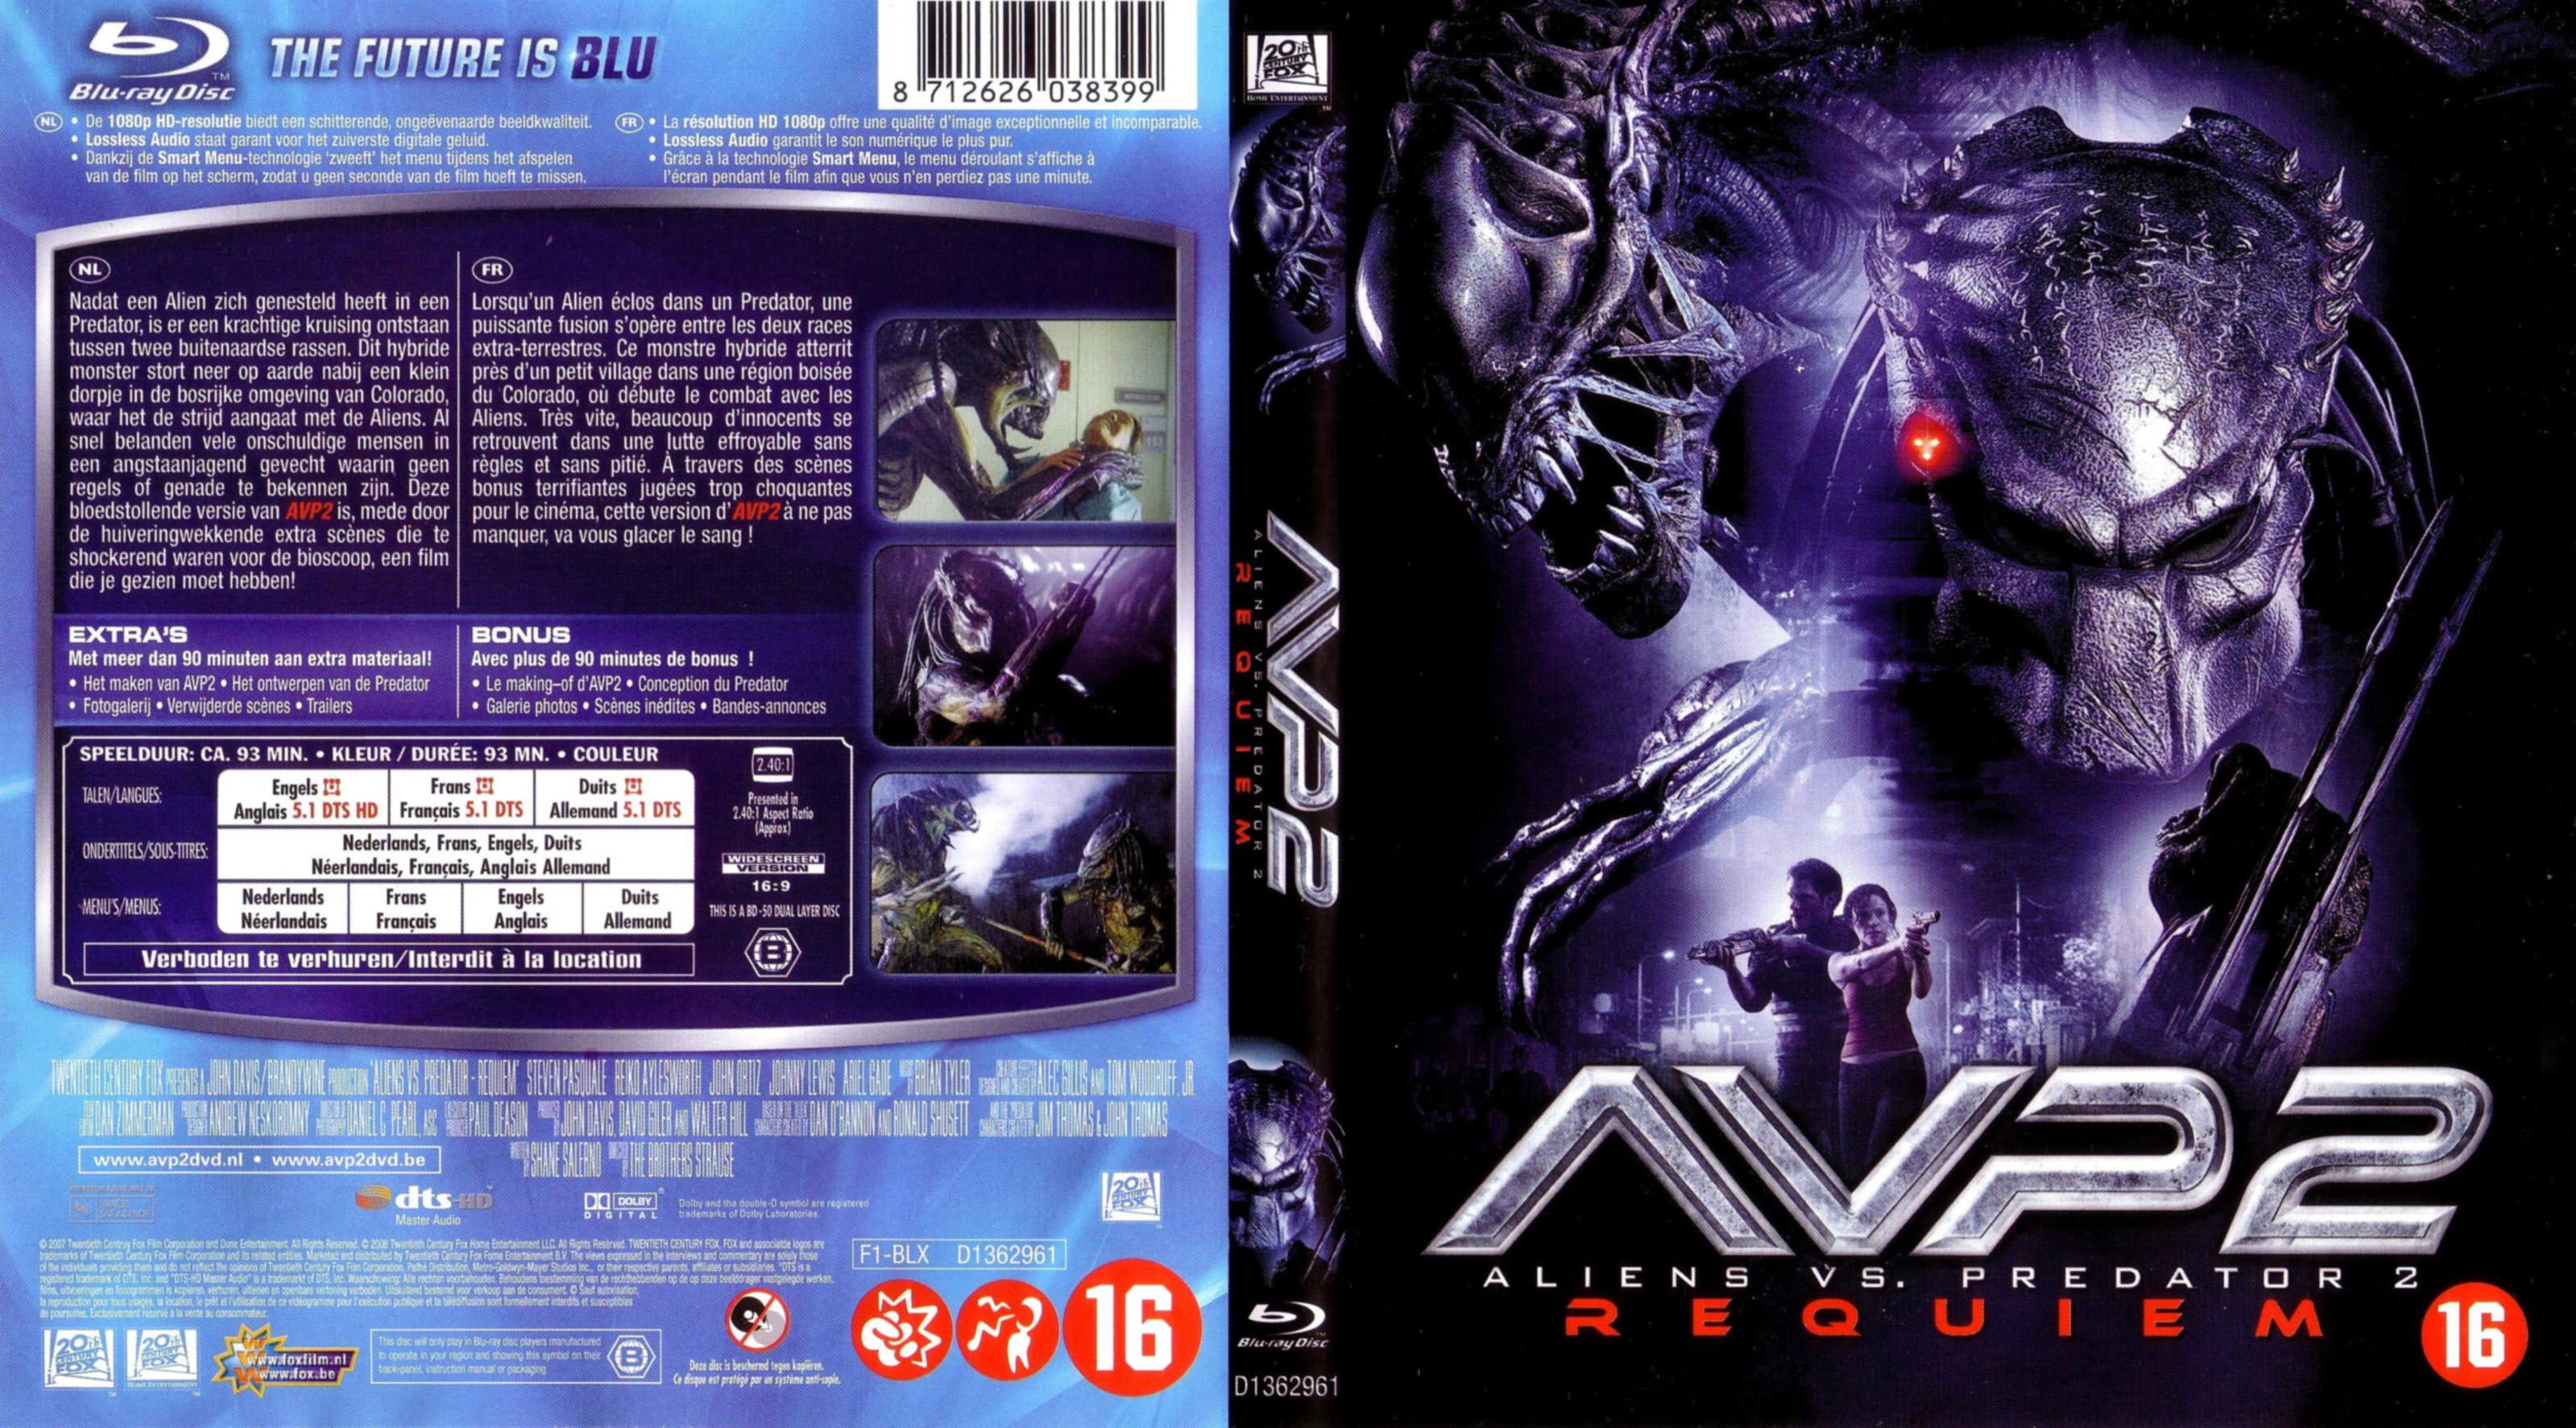 Jaquette DVD Aliens vs predator requiem (BLU-RAY) v2